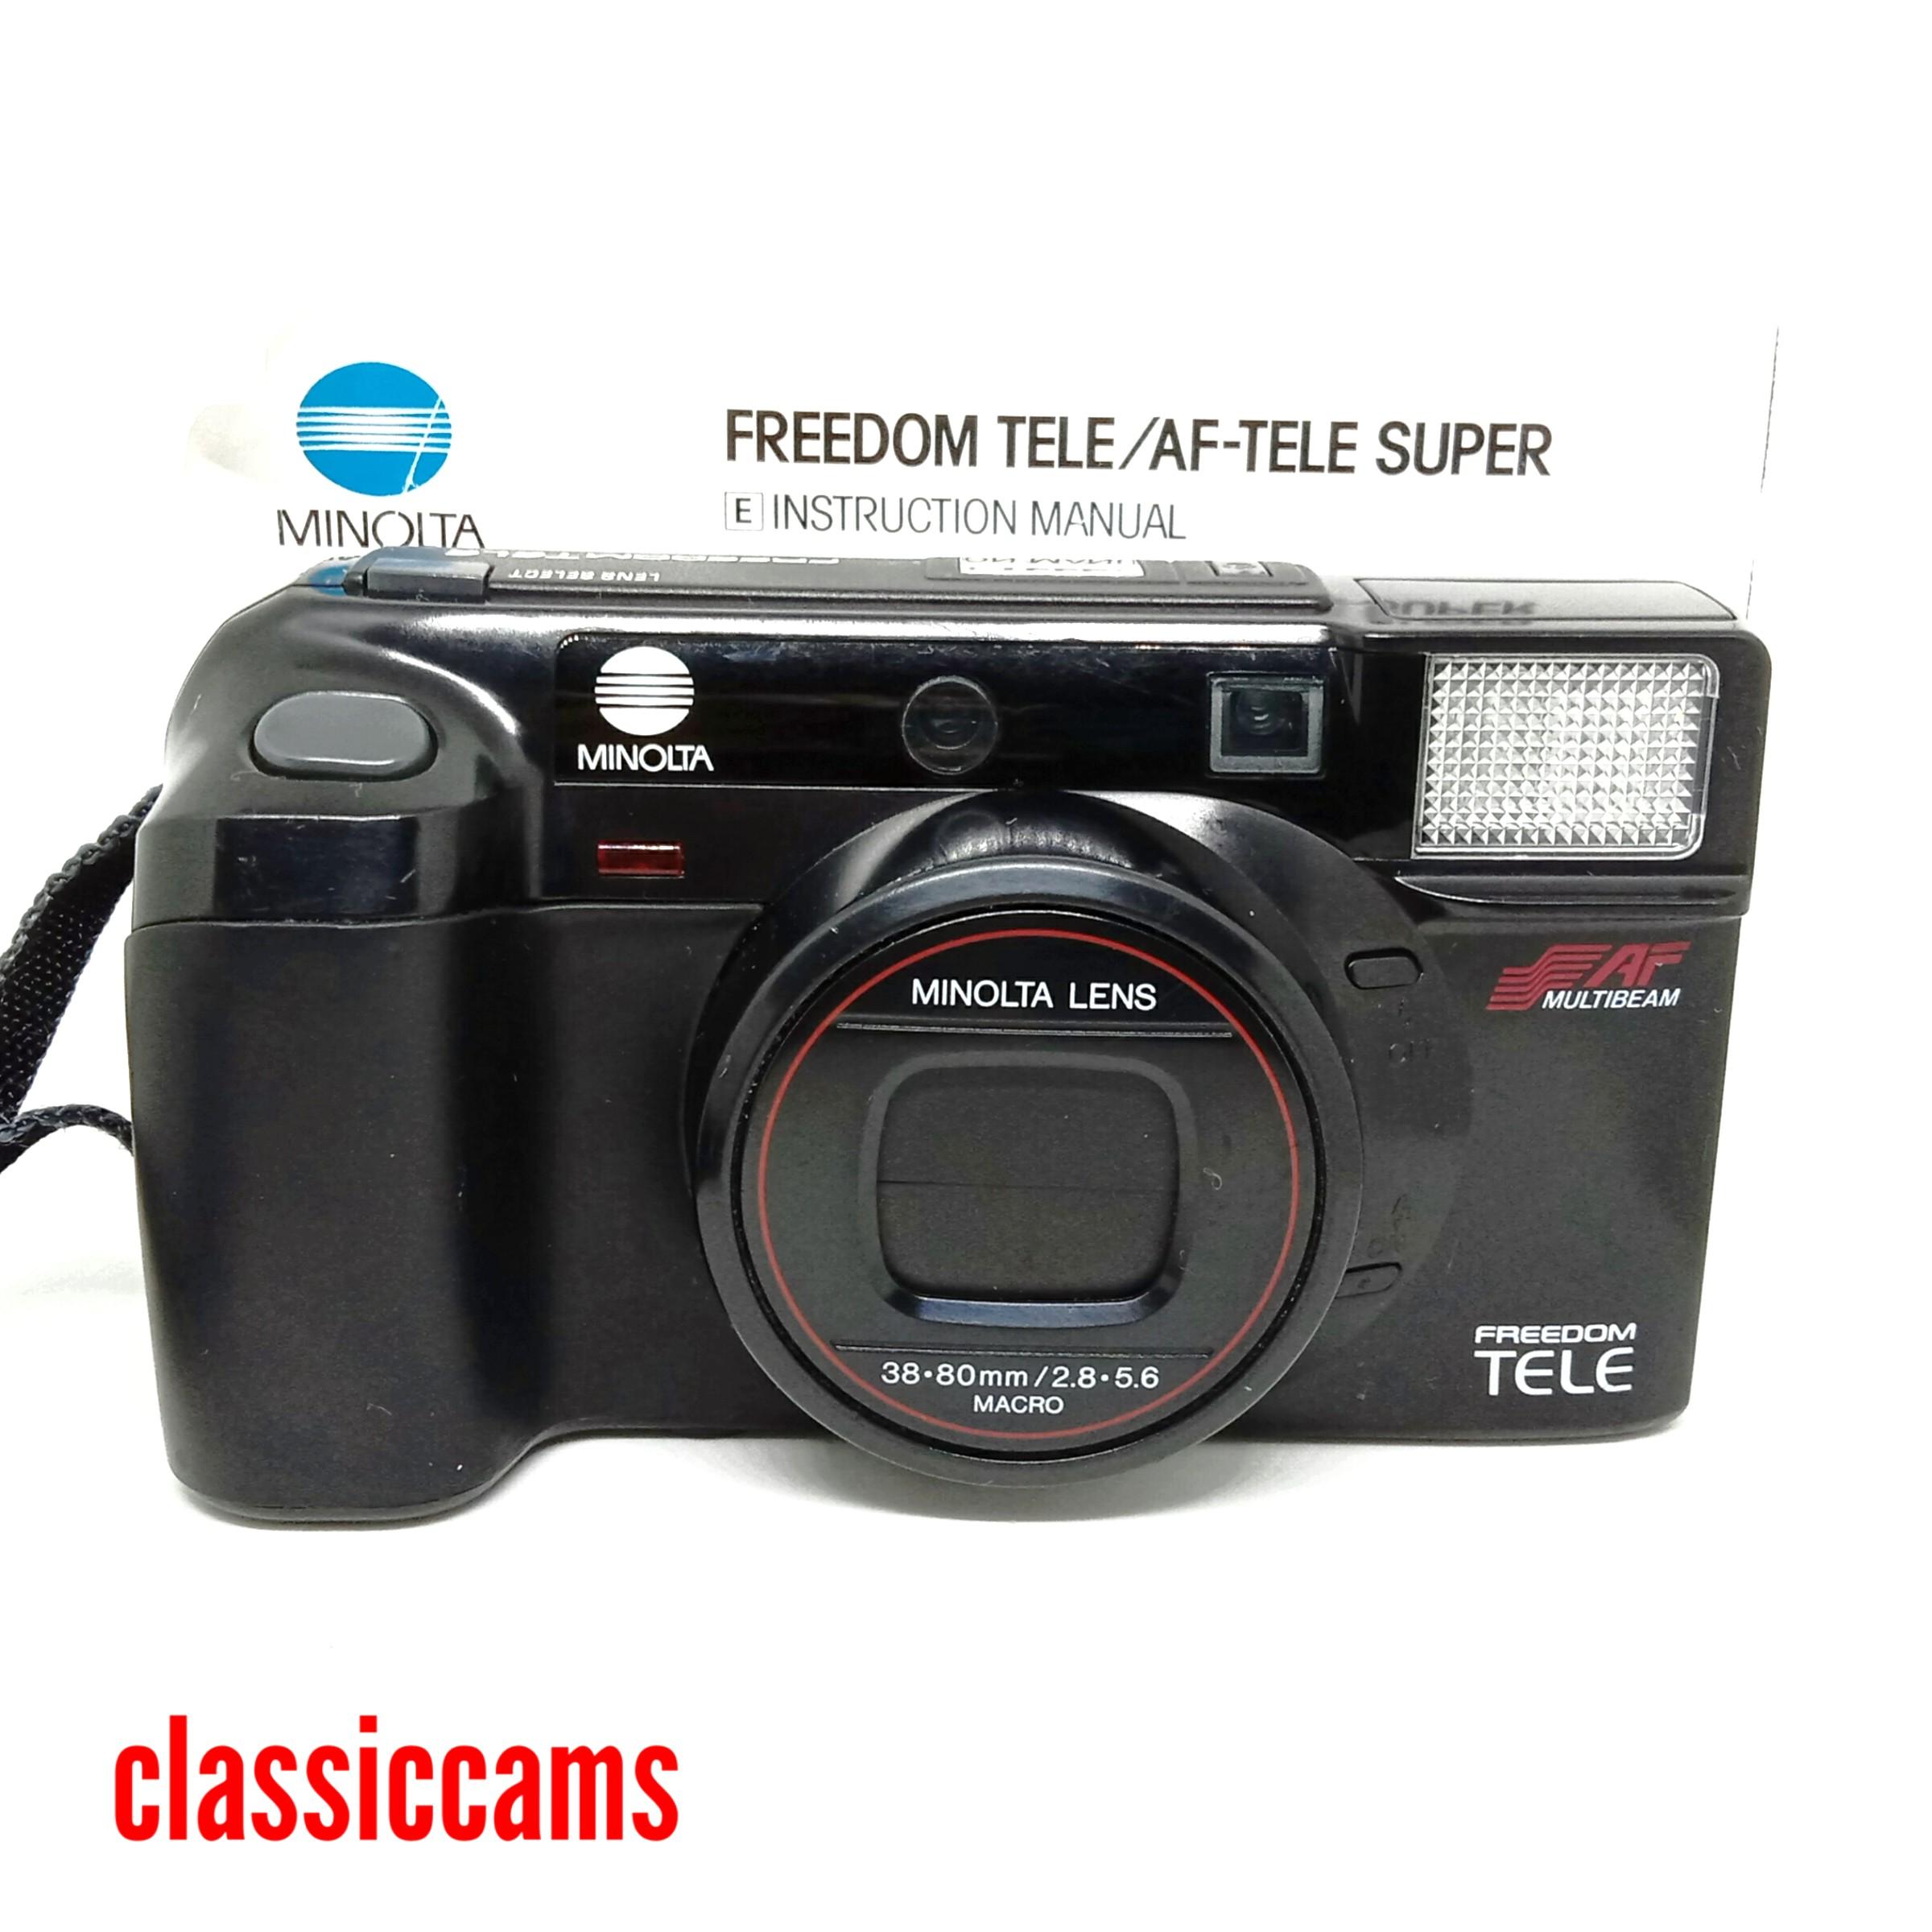 Minolta Freedom Tele 35mm Film Camera - Leica AF-C1 clone